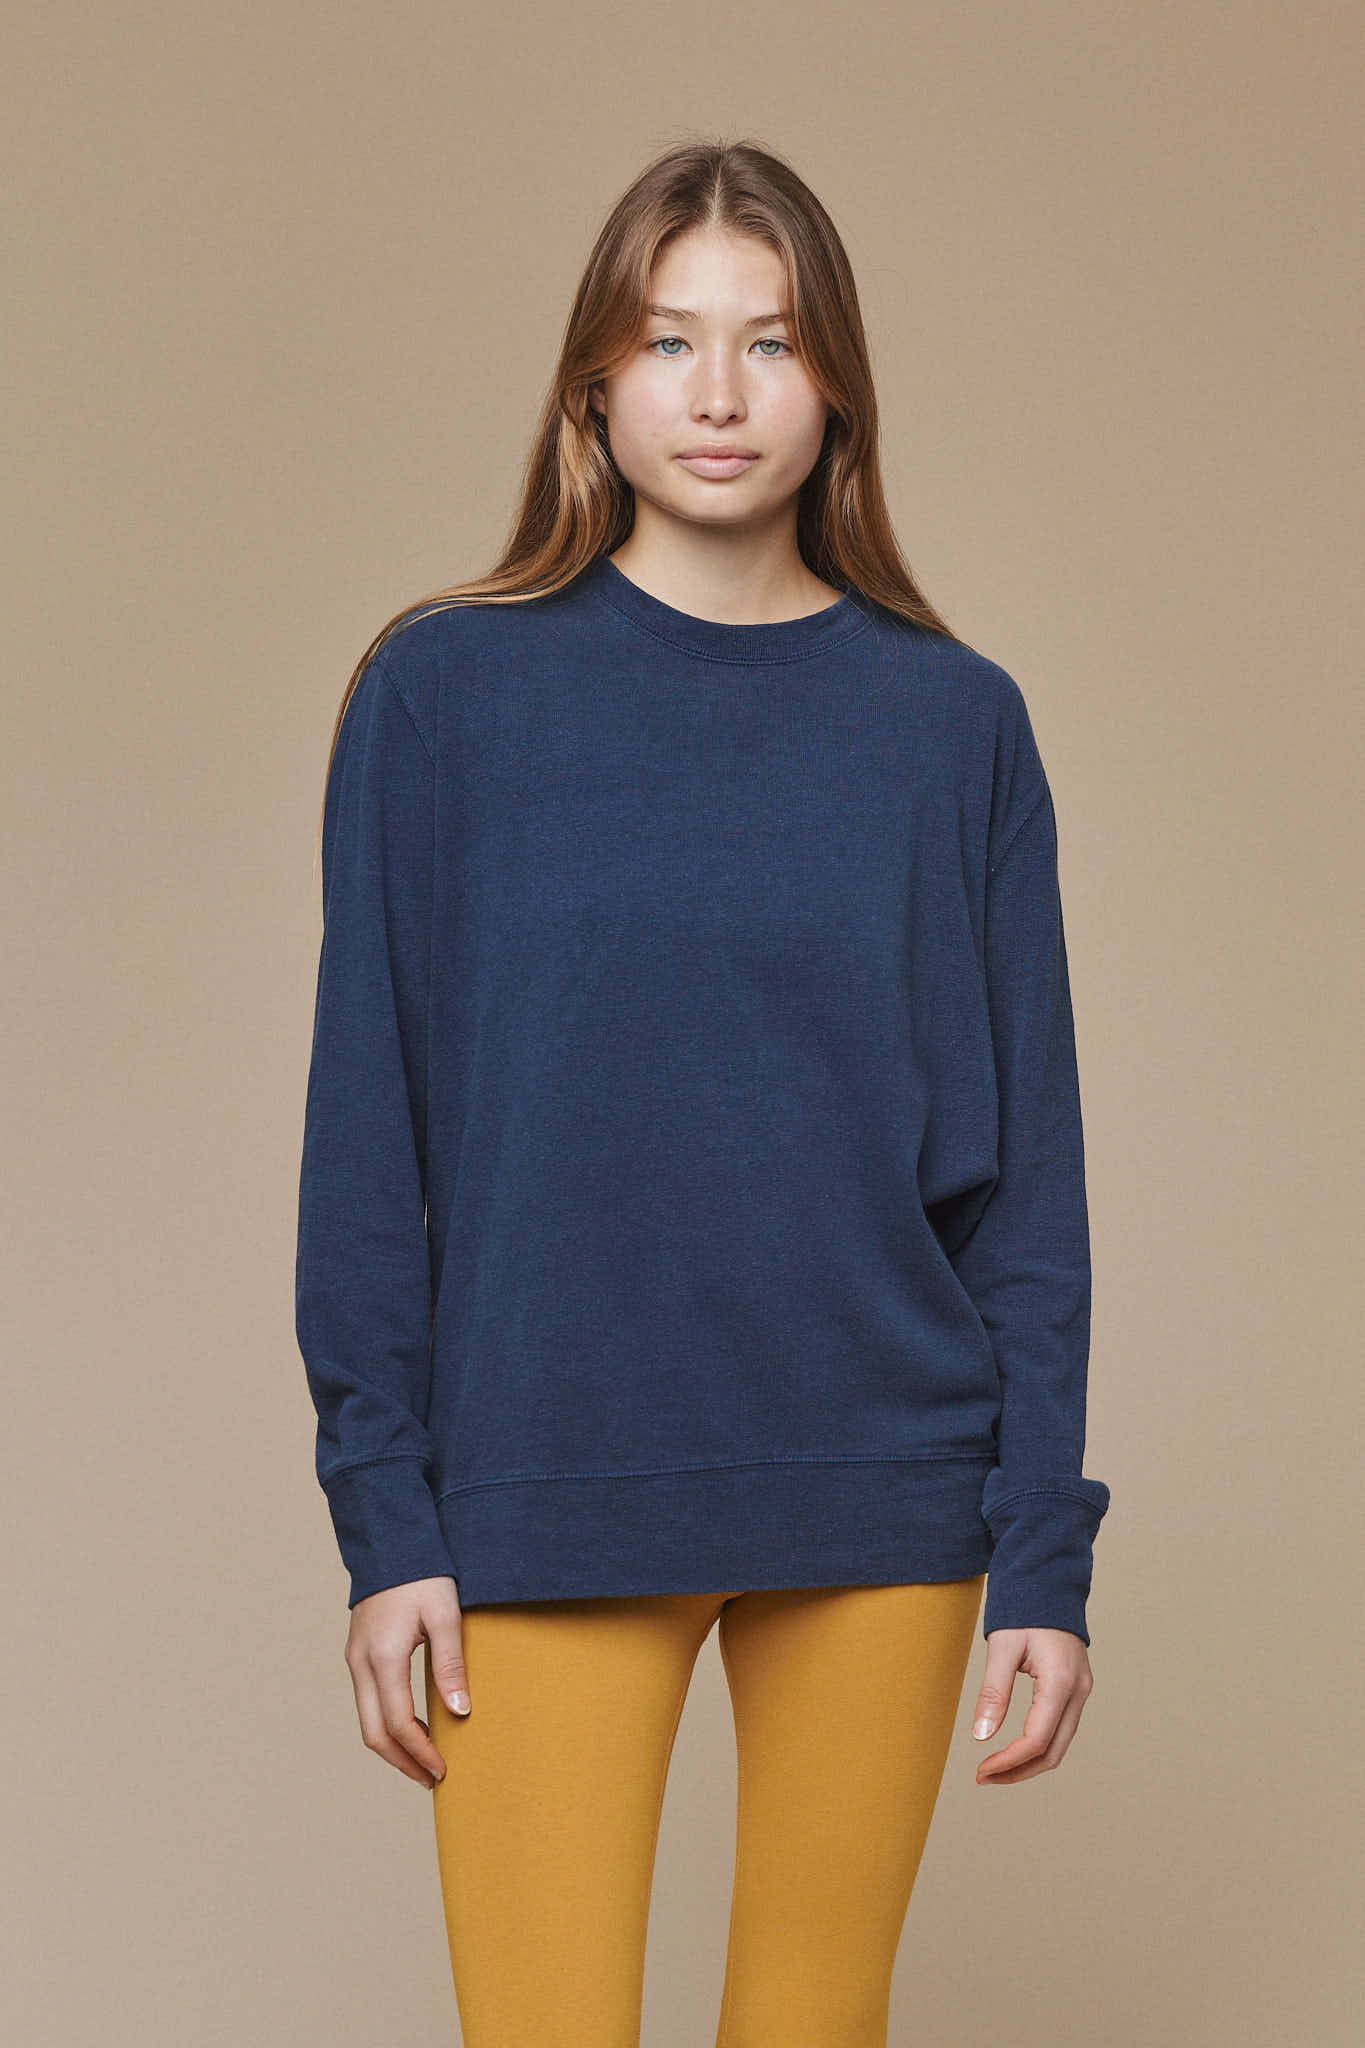 California Pullover | Jungmaven Hemp Clothing & Accessories / model_desc: Katriel is 5’9” wearing XS